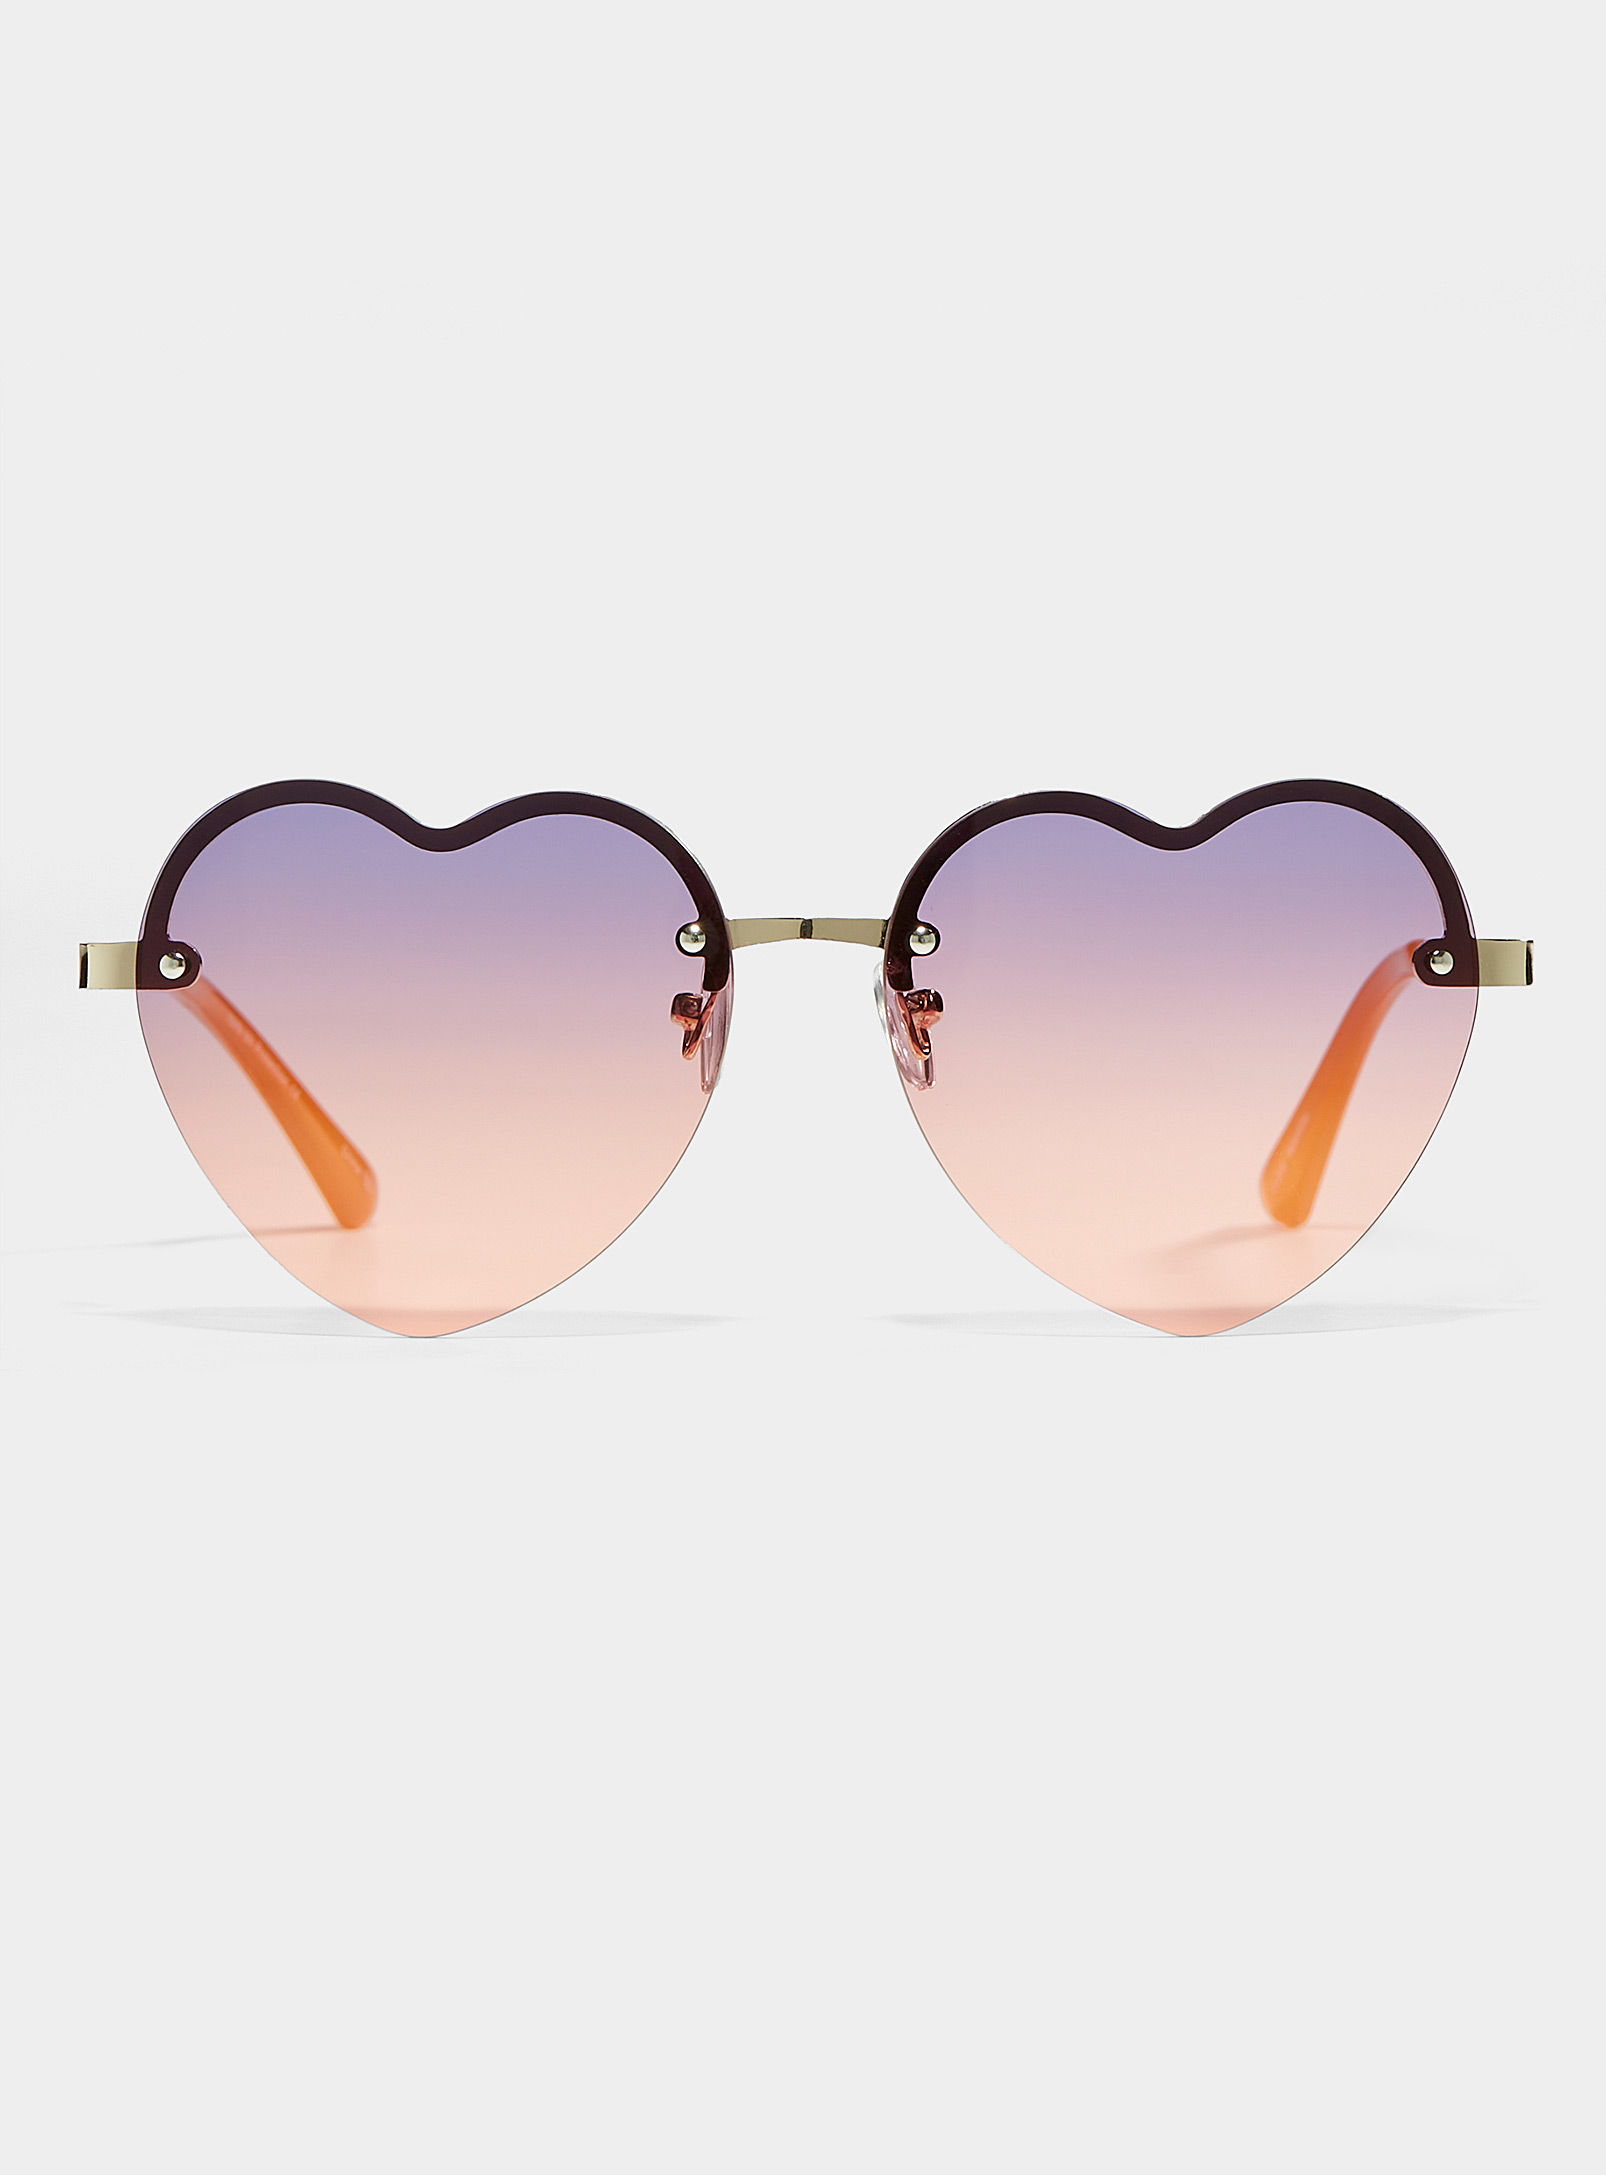 Simons - Women's Valentina heart sunglasses